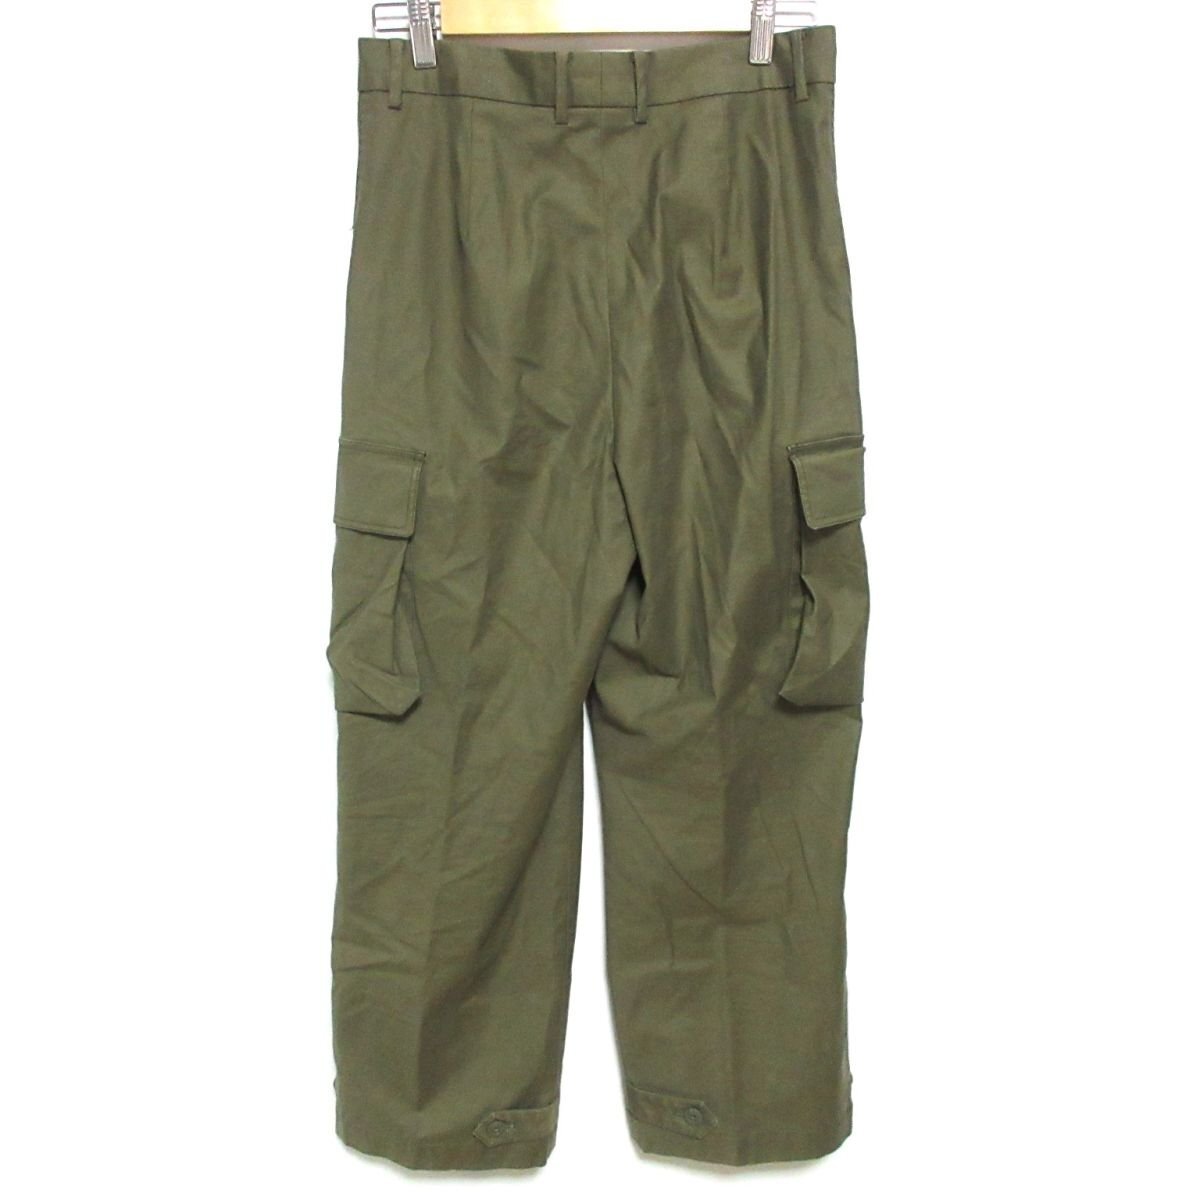  beautiful goods Liesselies stretch military cargo pants 3 khaki *